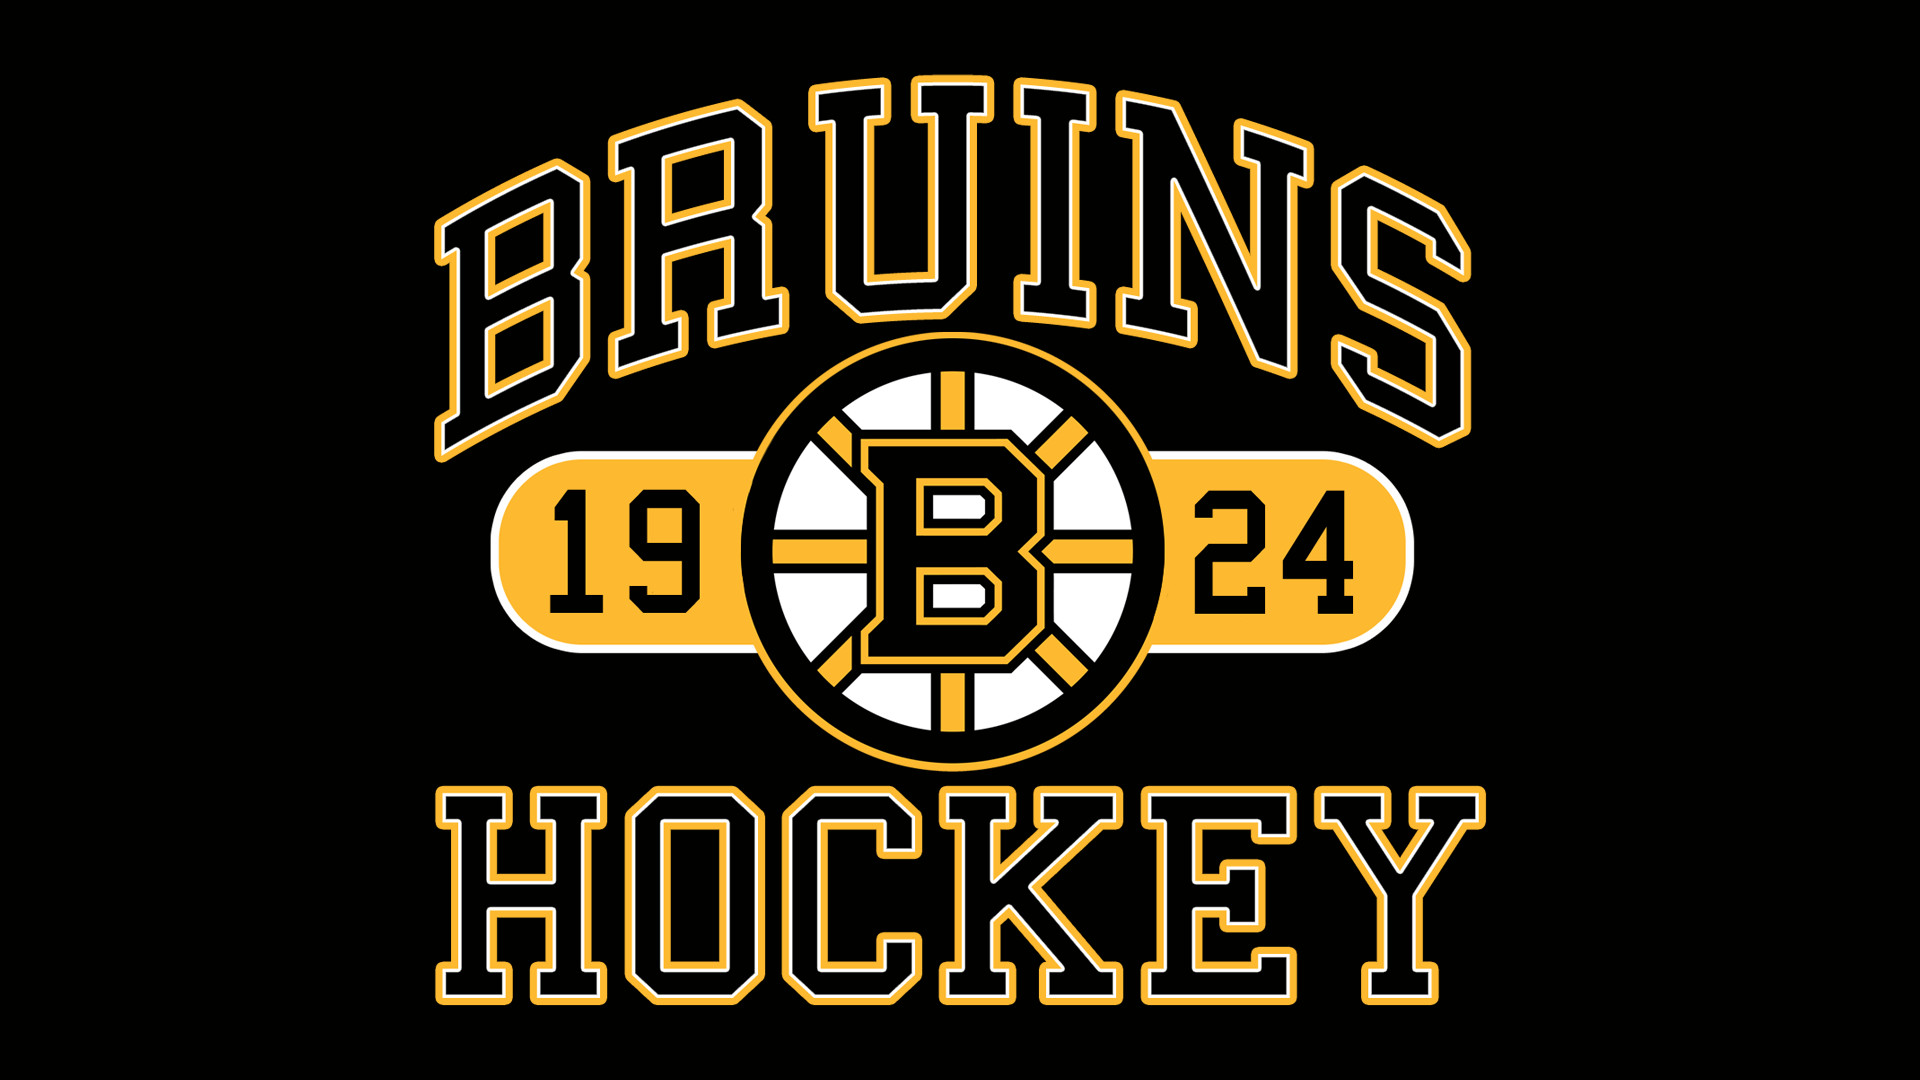 BOSTON BRUINS nhl hockey (40) wallpaper, 1920x1080, 336555